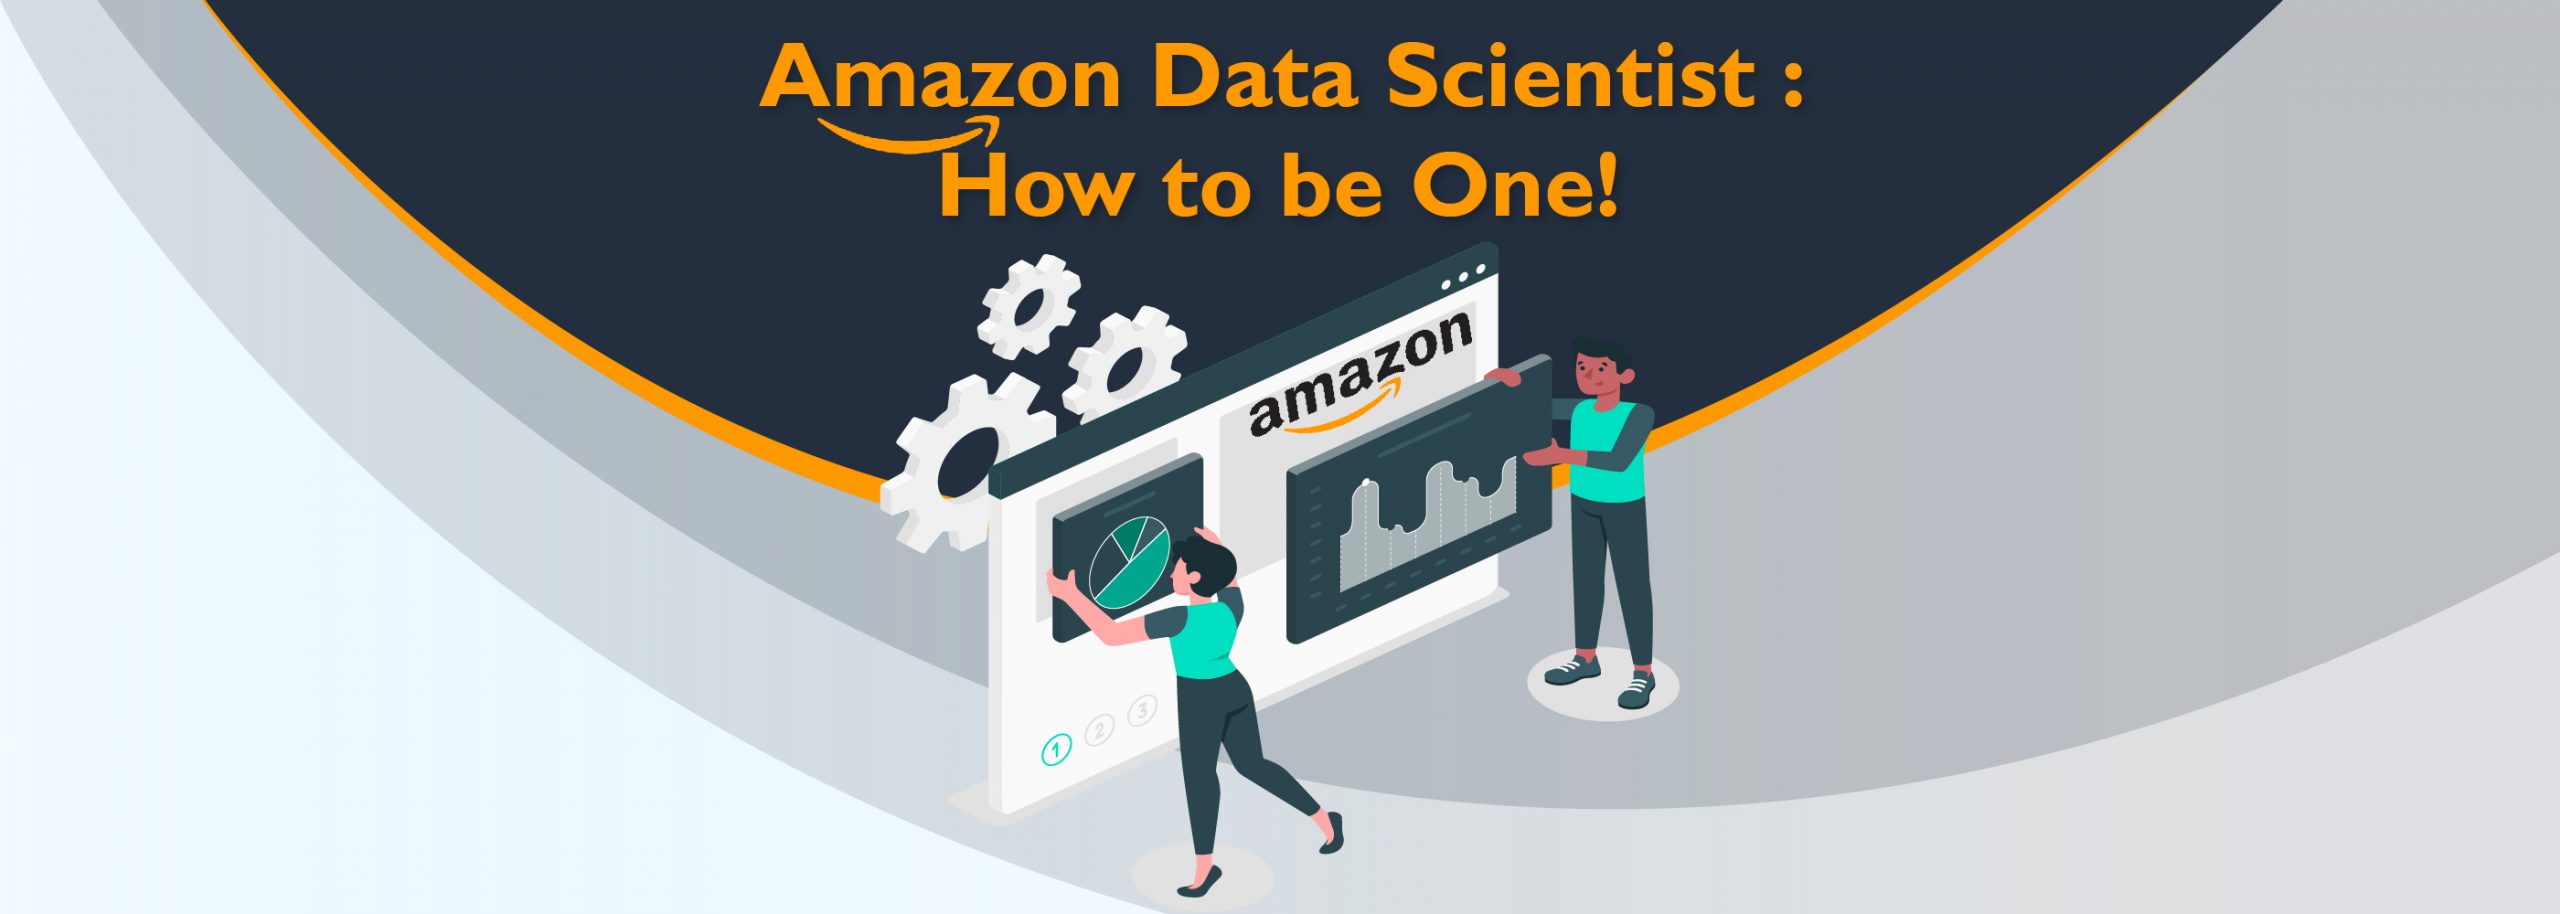 Amazon Data Scientist